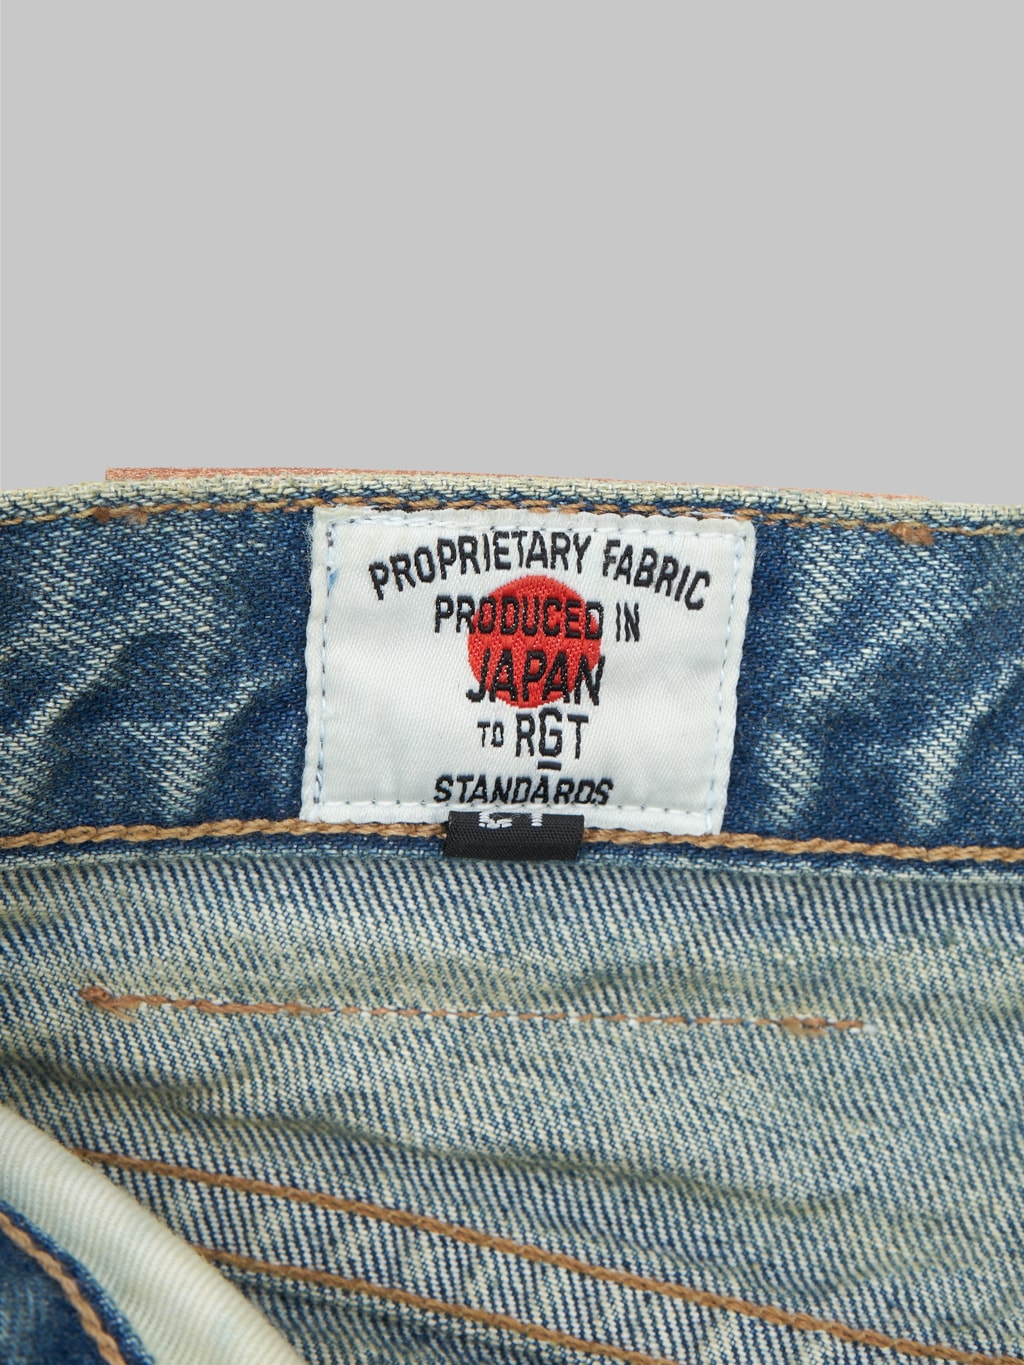 rogue territory strider light indigo wash selvedge jeans interior tag